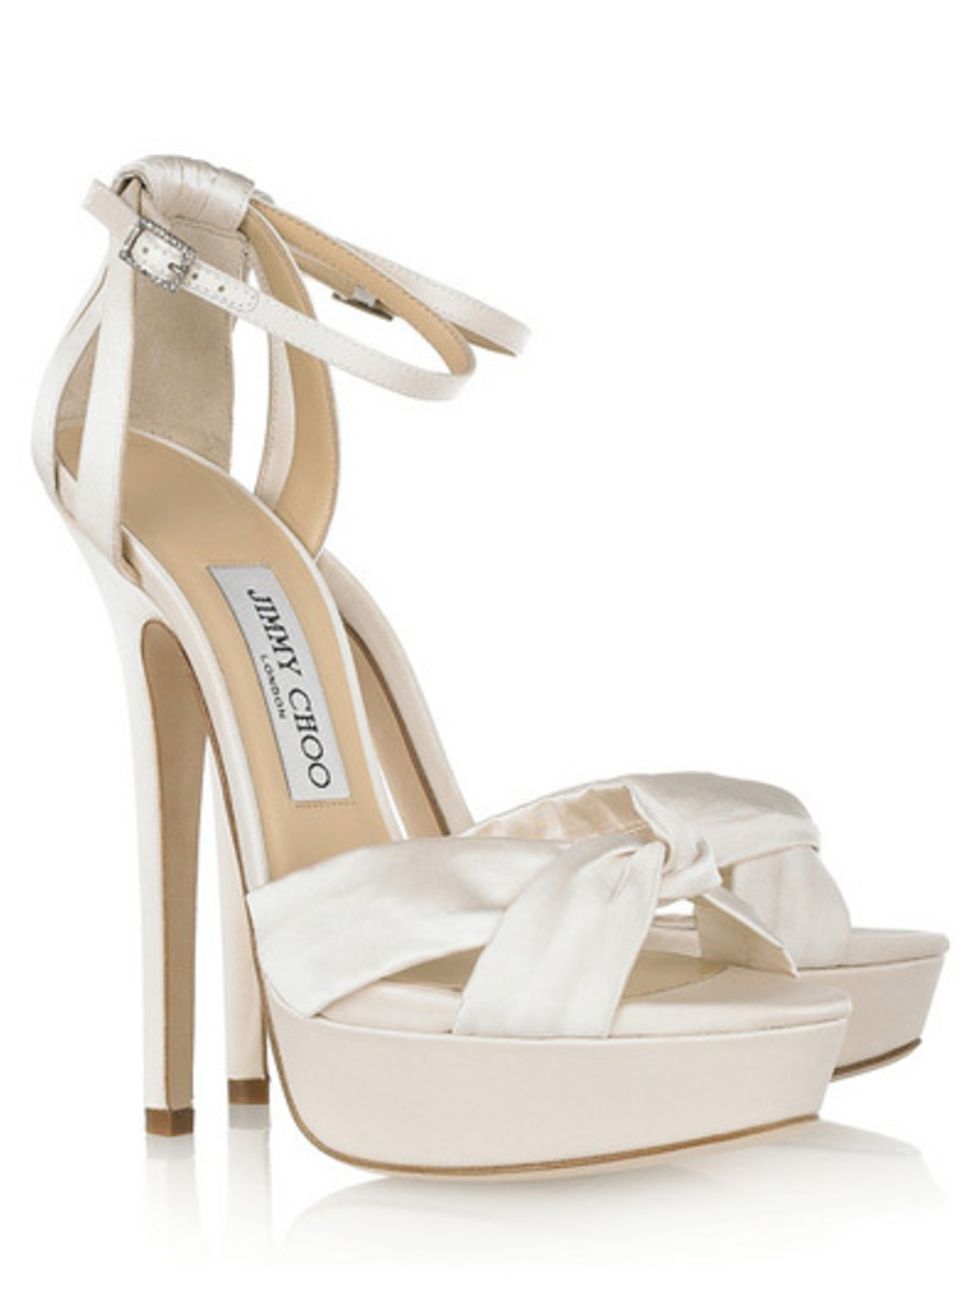 Footwear, Product, High heels, White, Sandal, Basic pump, Tan, Fashion, Beige, Bridal shoe, 